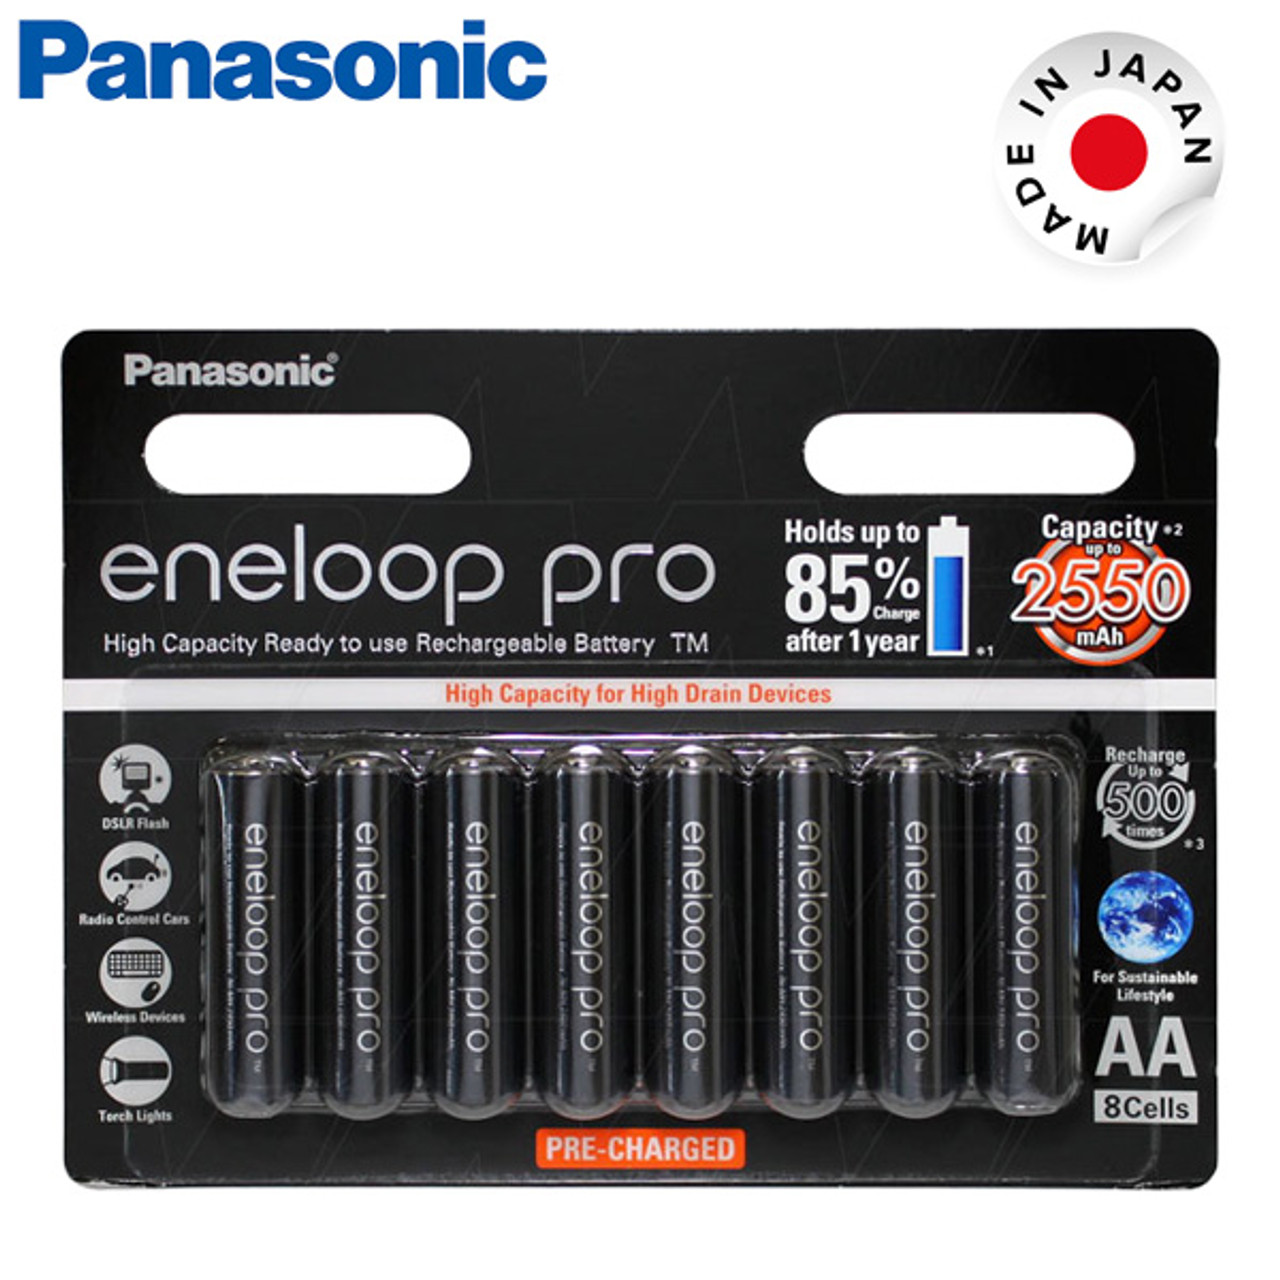 Panasonic eneloop PRO AA Rechargable Batteries 2550mAh (Black , 8